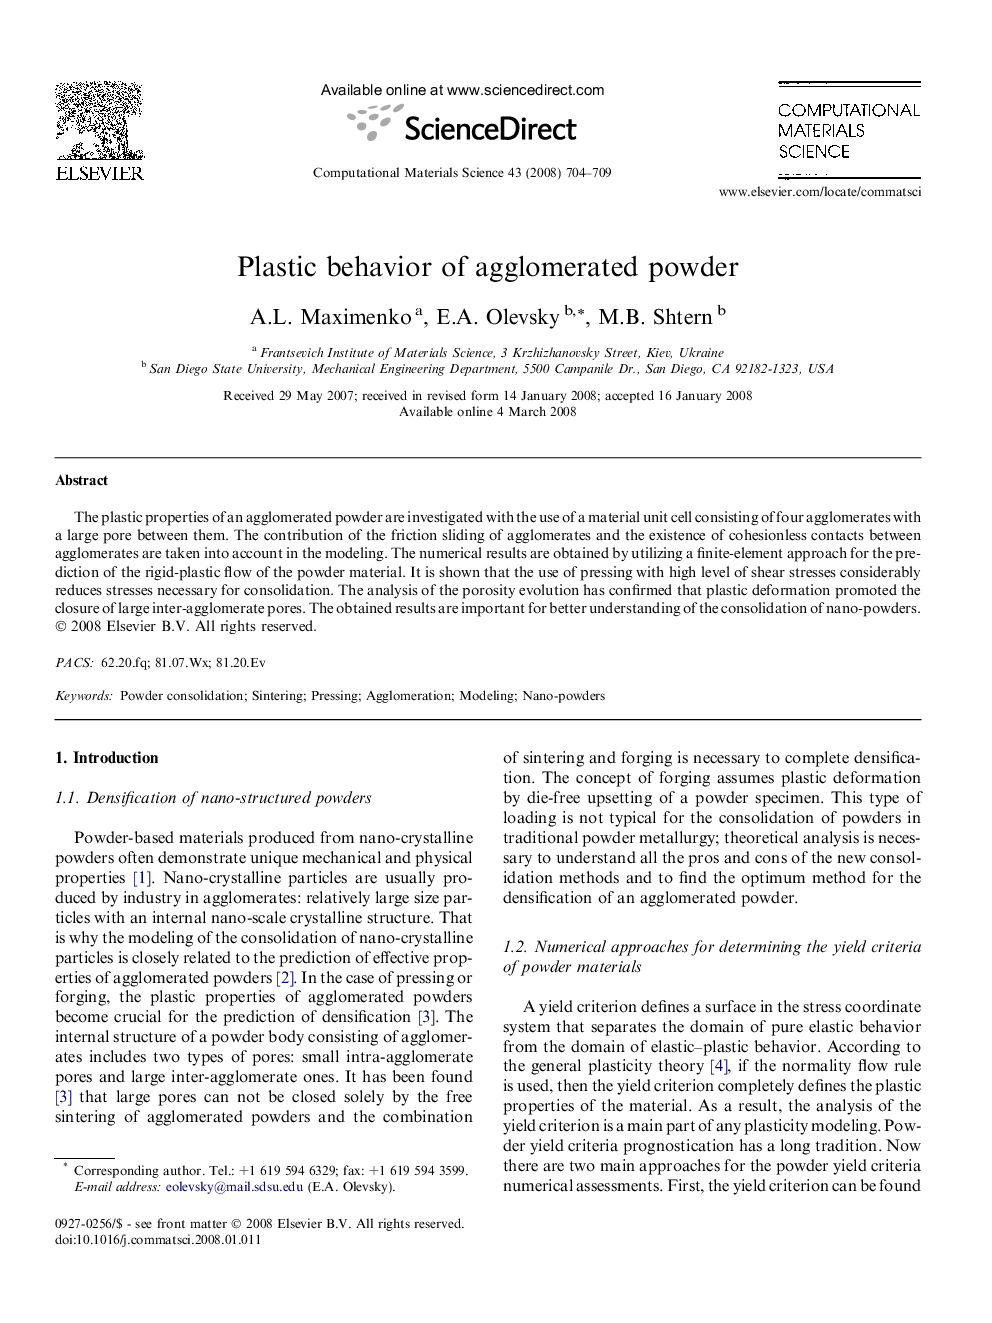 Plastic behavior of agglomerated powder